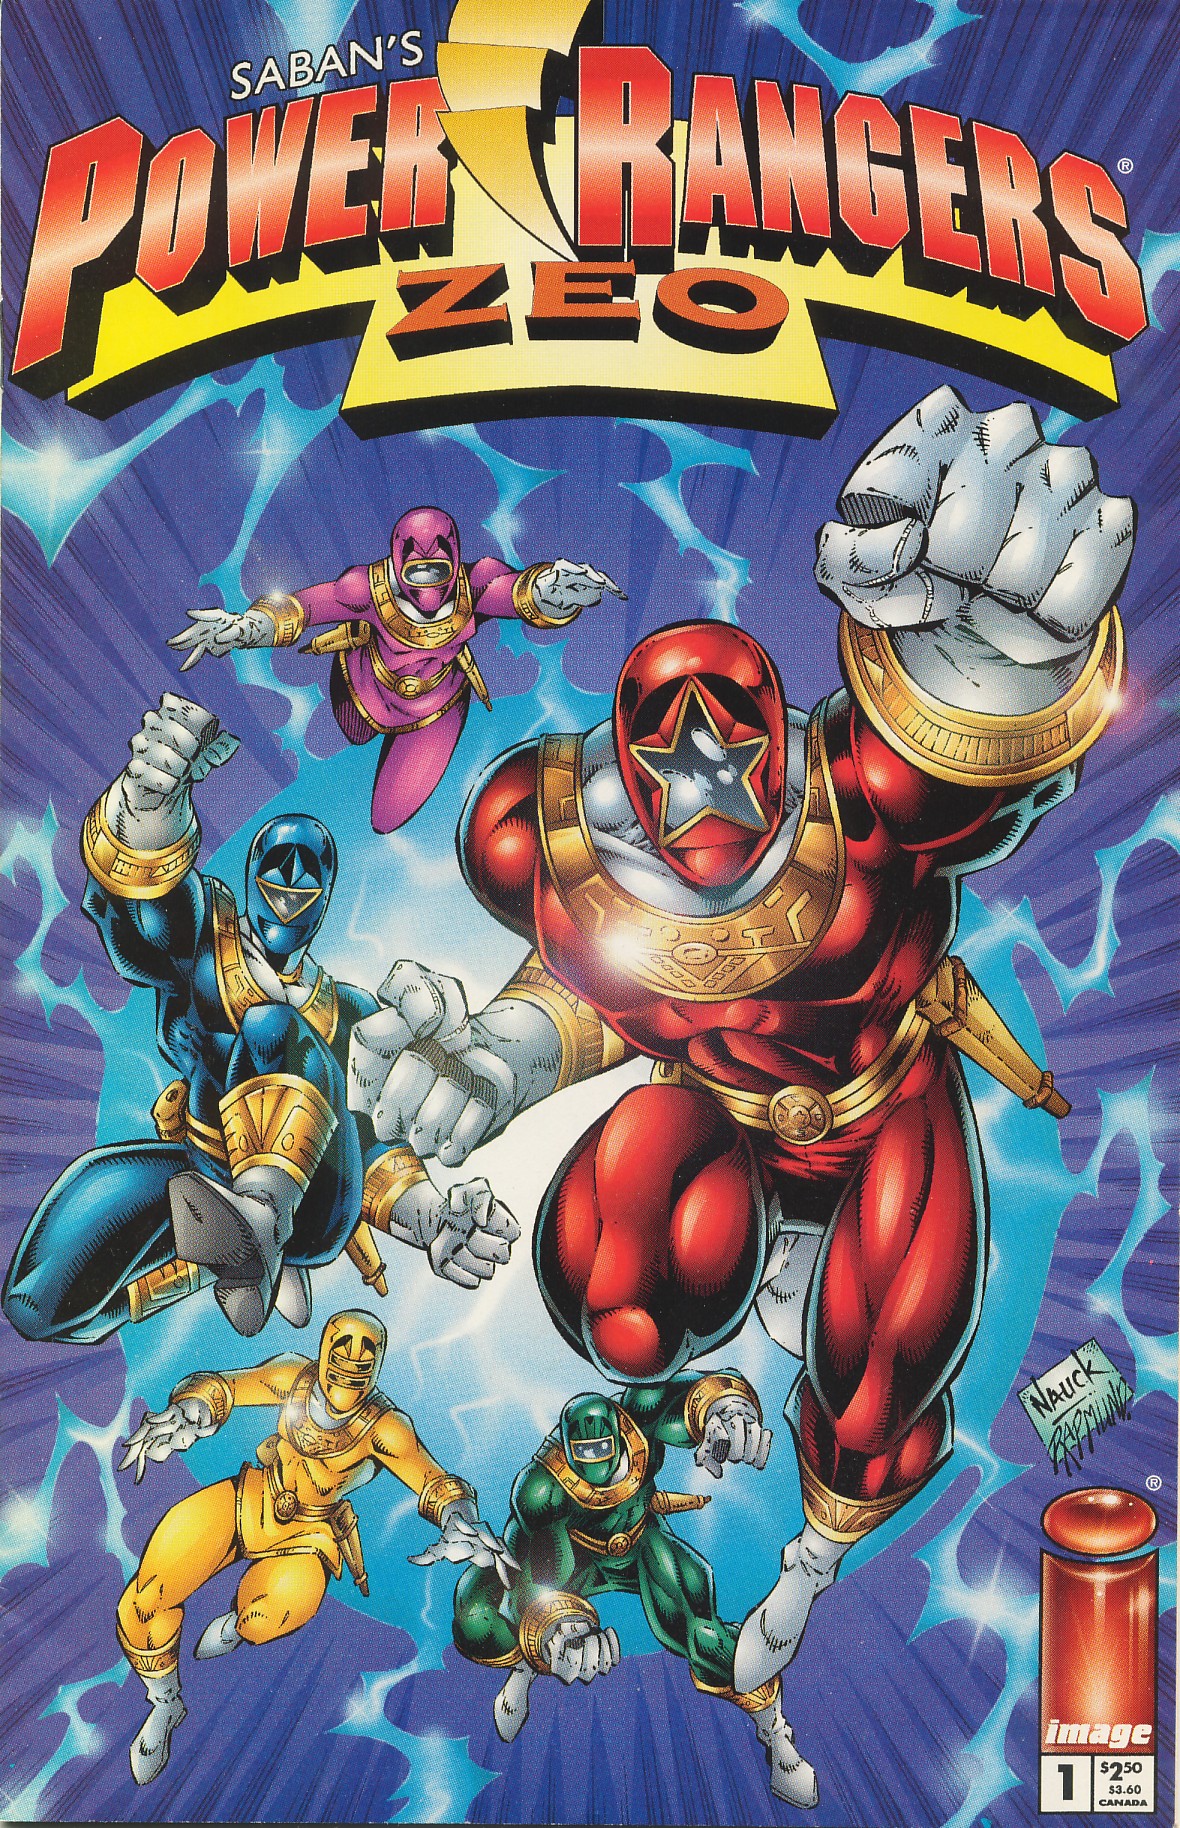 Power Rangers Zeo Issue 1